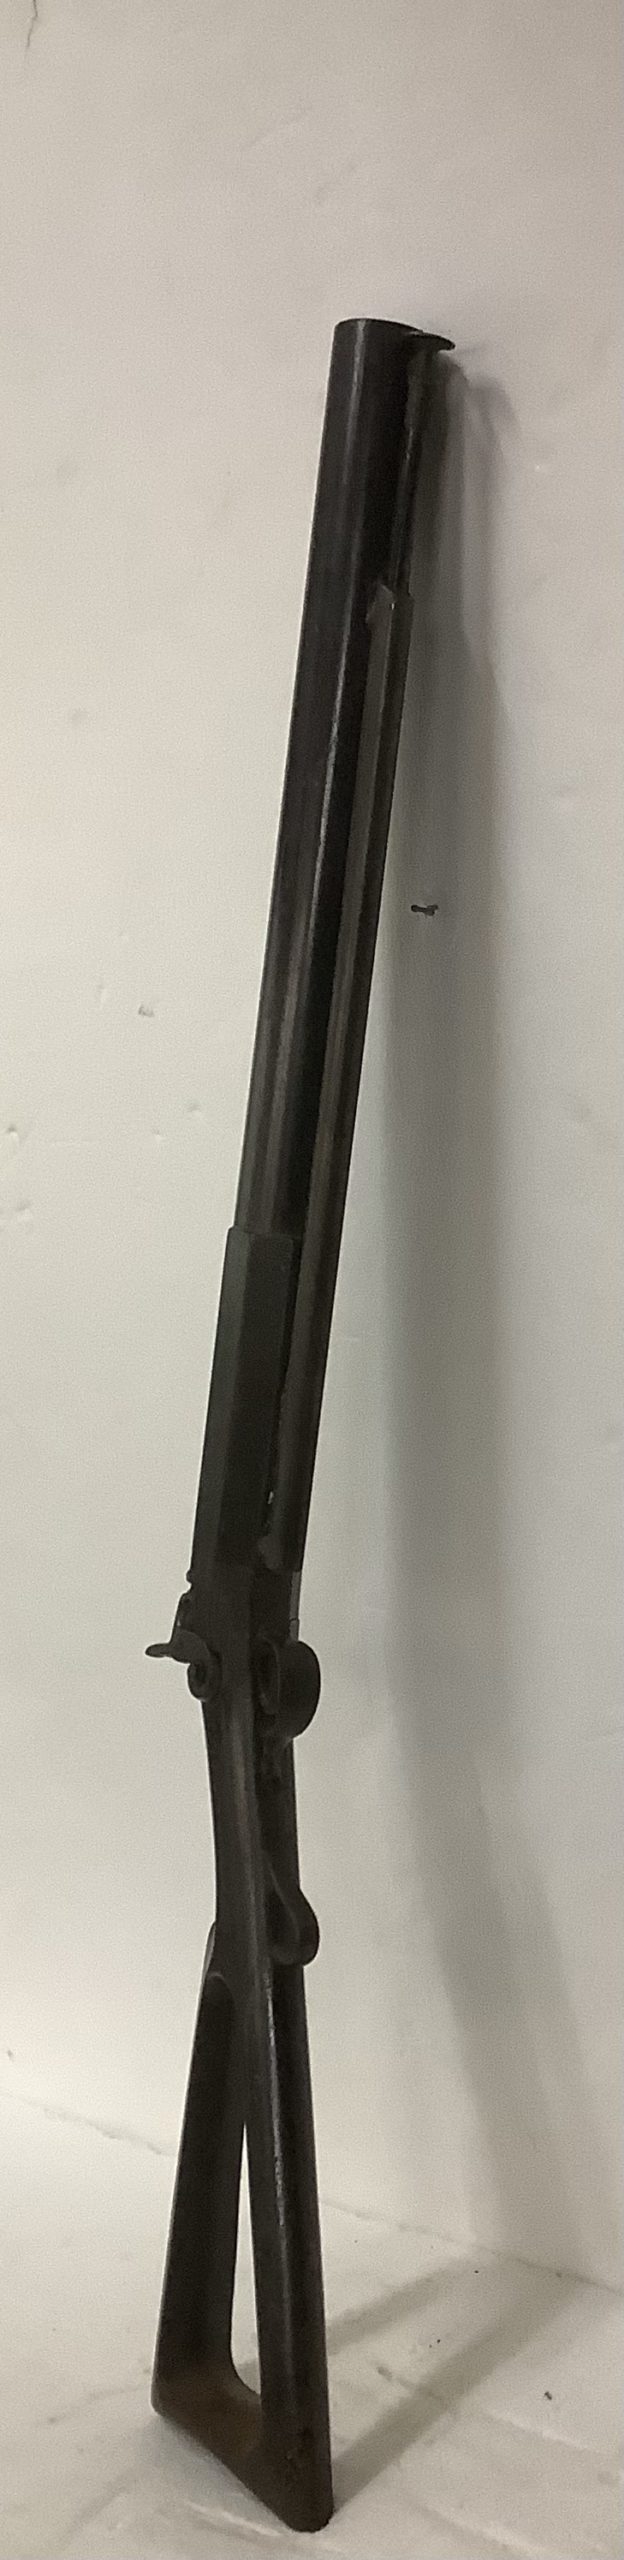 1800's Harpoon Gun